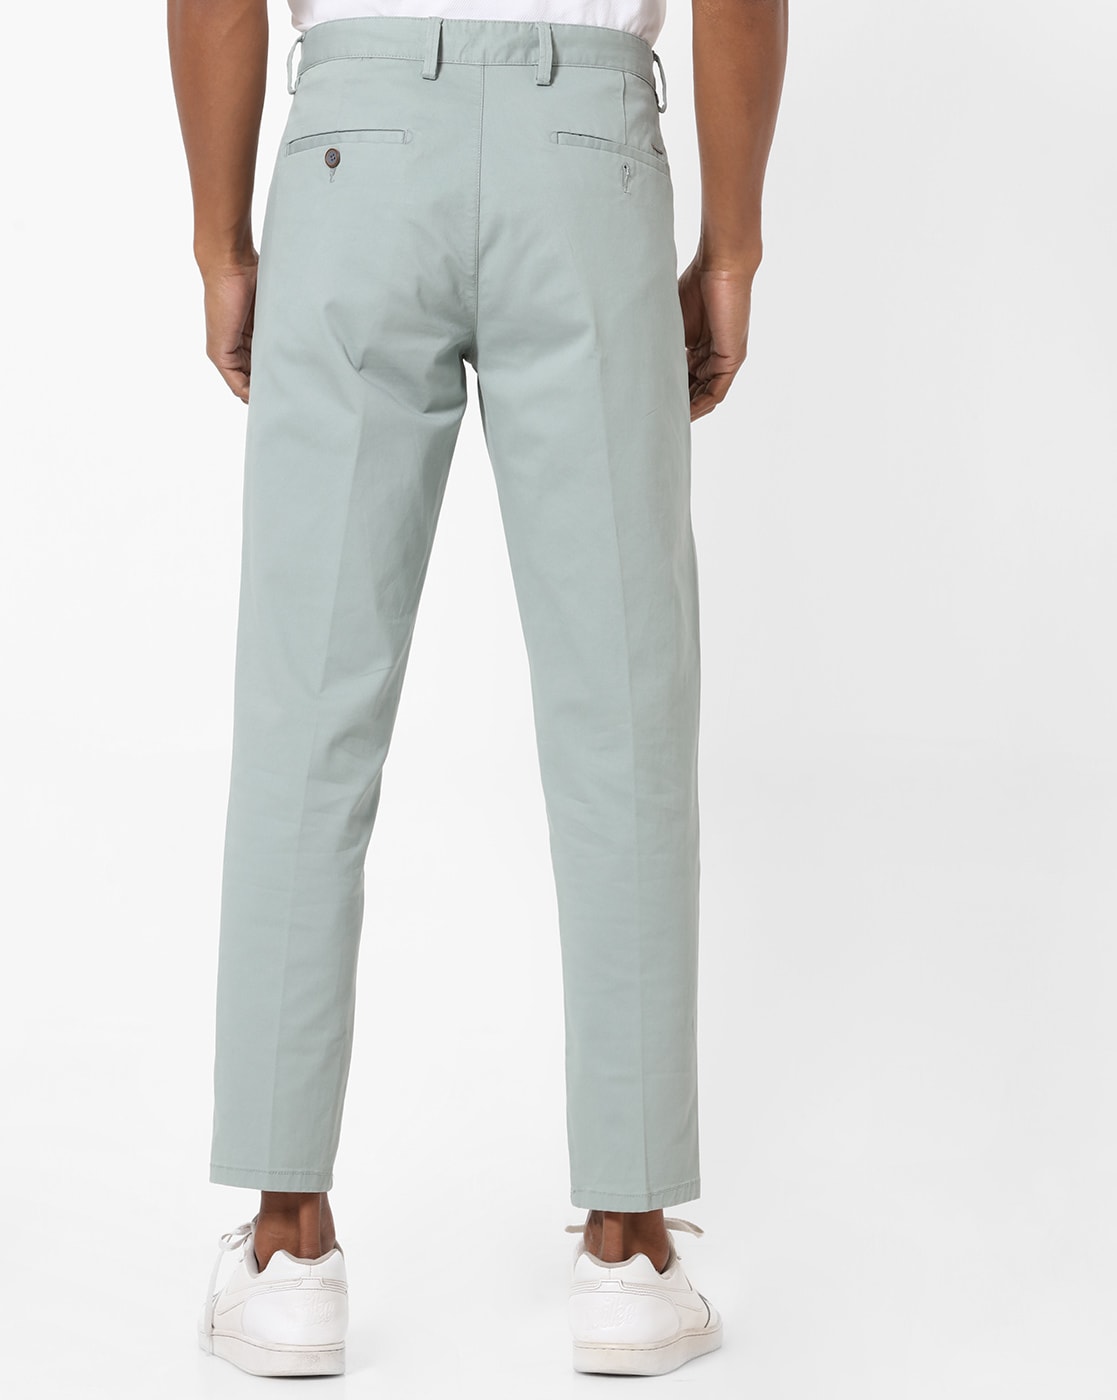 Buy Peter England Men's Slim Casual Pants (PCTFSSLPB43766_Olive at Amazon.in